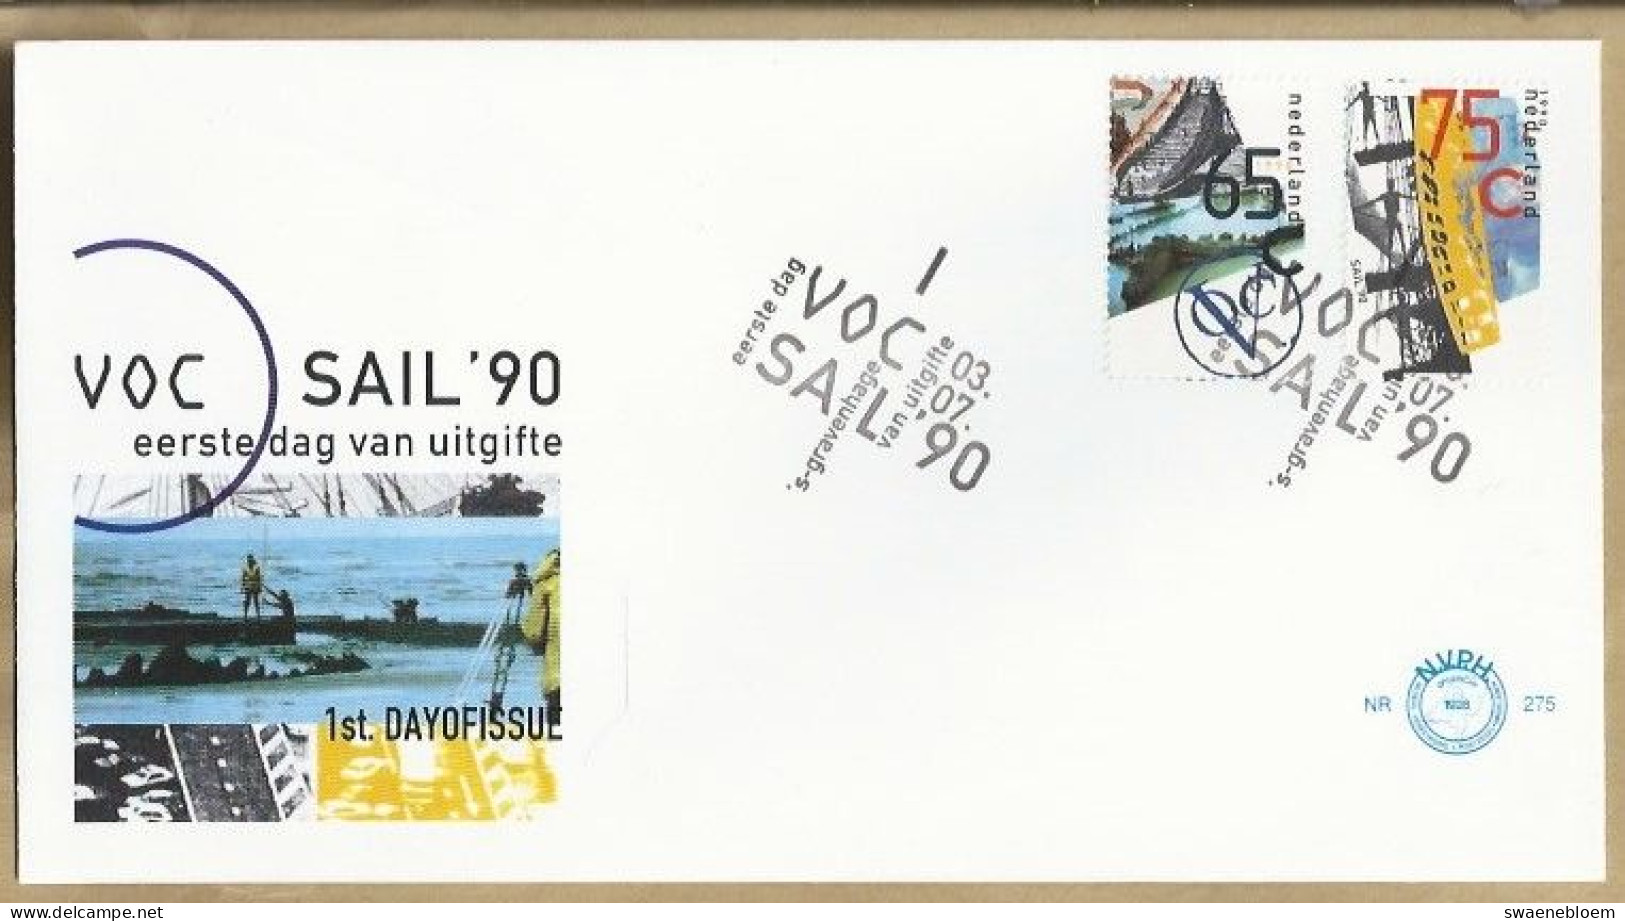 NL.- FDC. NVPH Nr. 275. EERSTE DAG VAN UITGIFTE. FIRST DAY OF ISSUE. 03-07-1990. VOC. SAIL '90. 1st. DAYOFISSUL - FDC